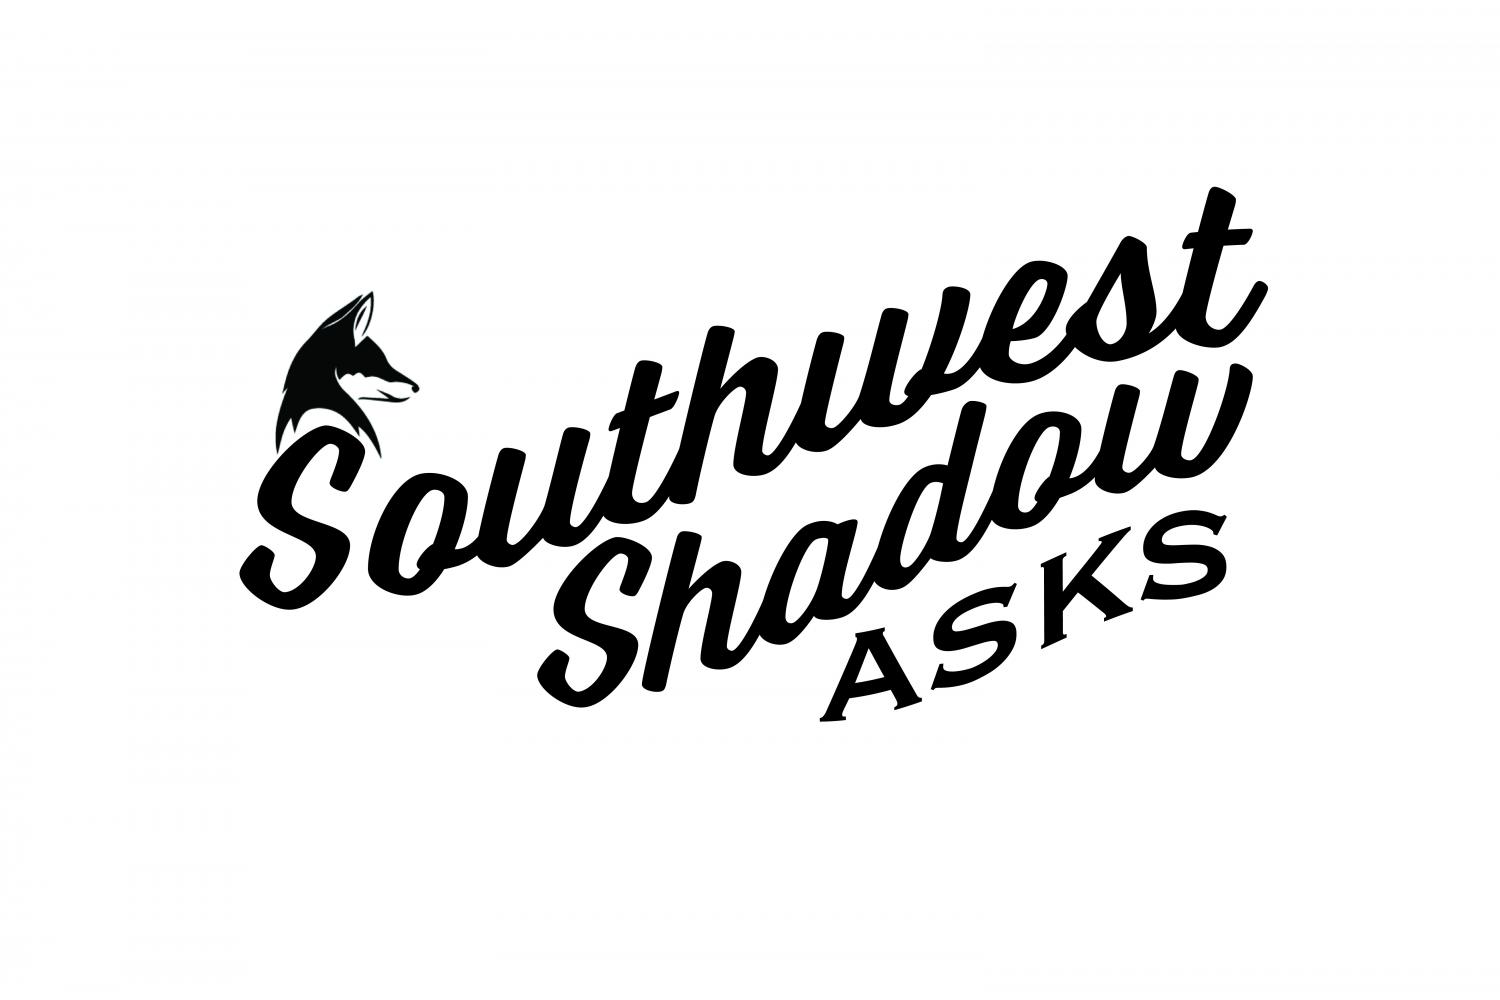 Southwest Shadow Asks: Sahib Rattan